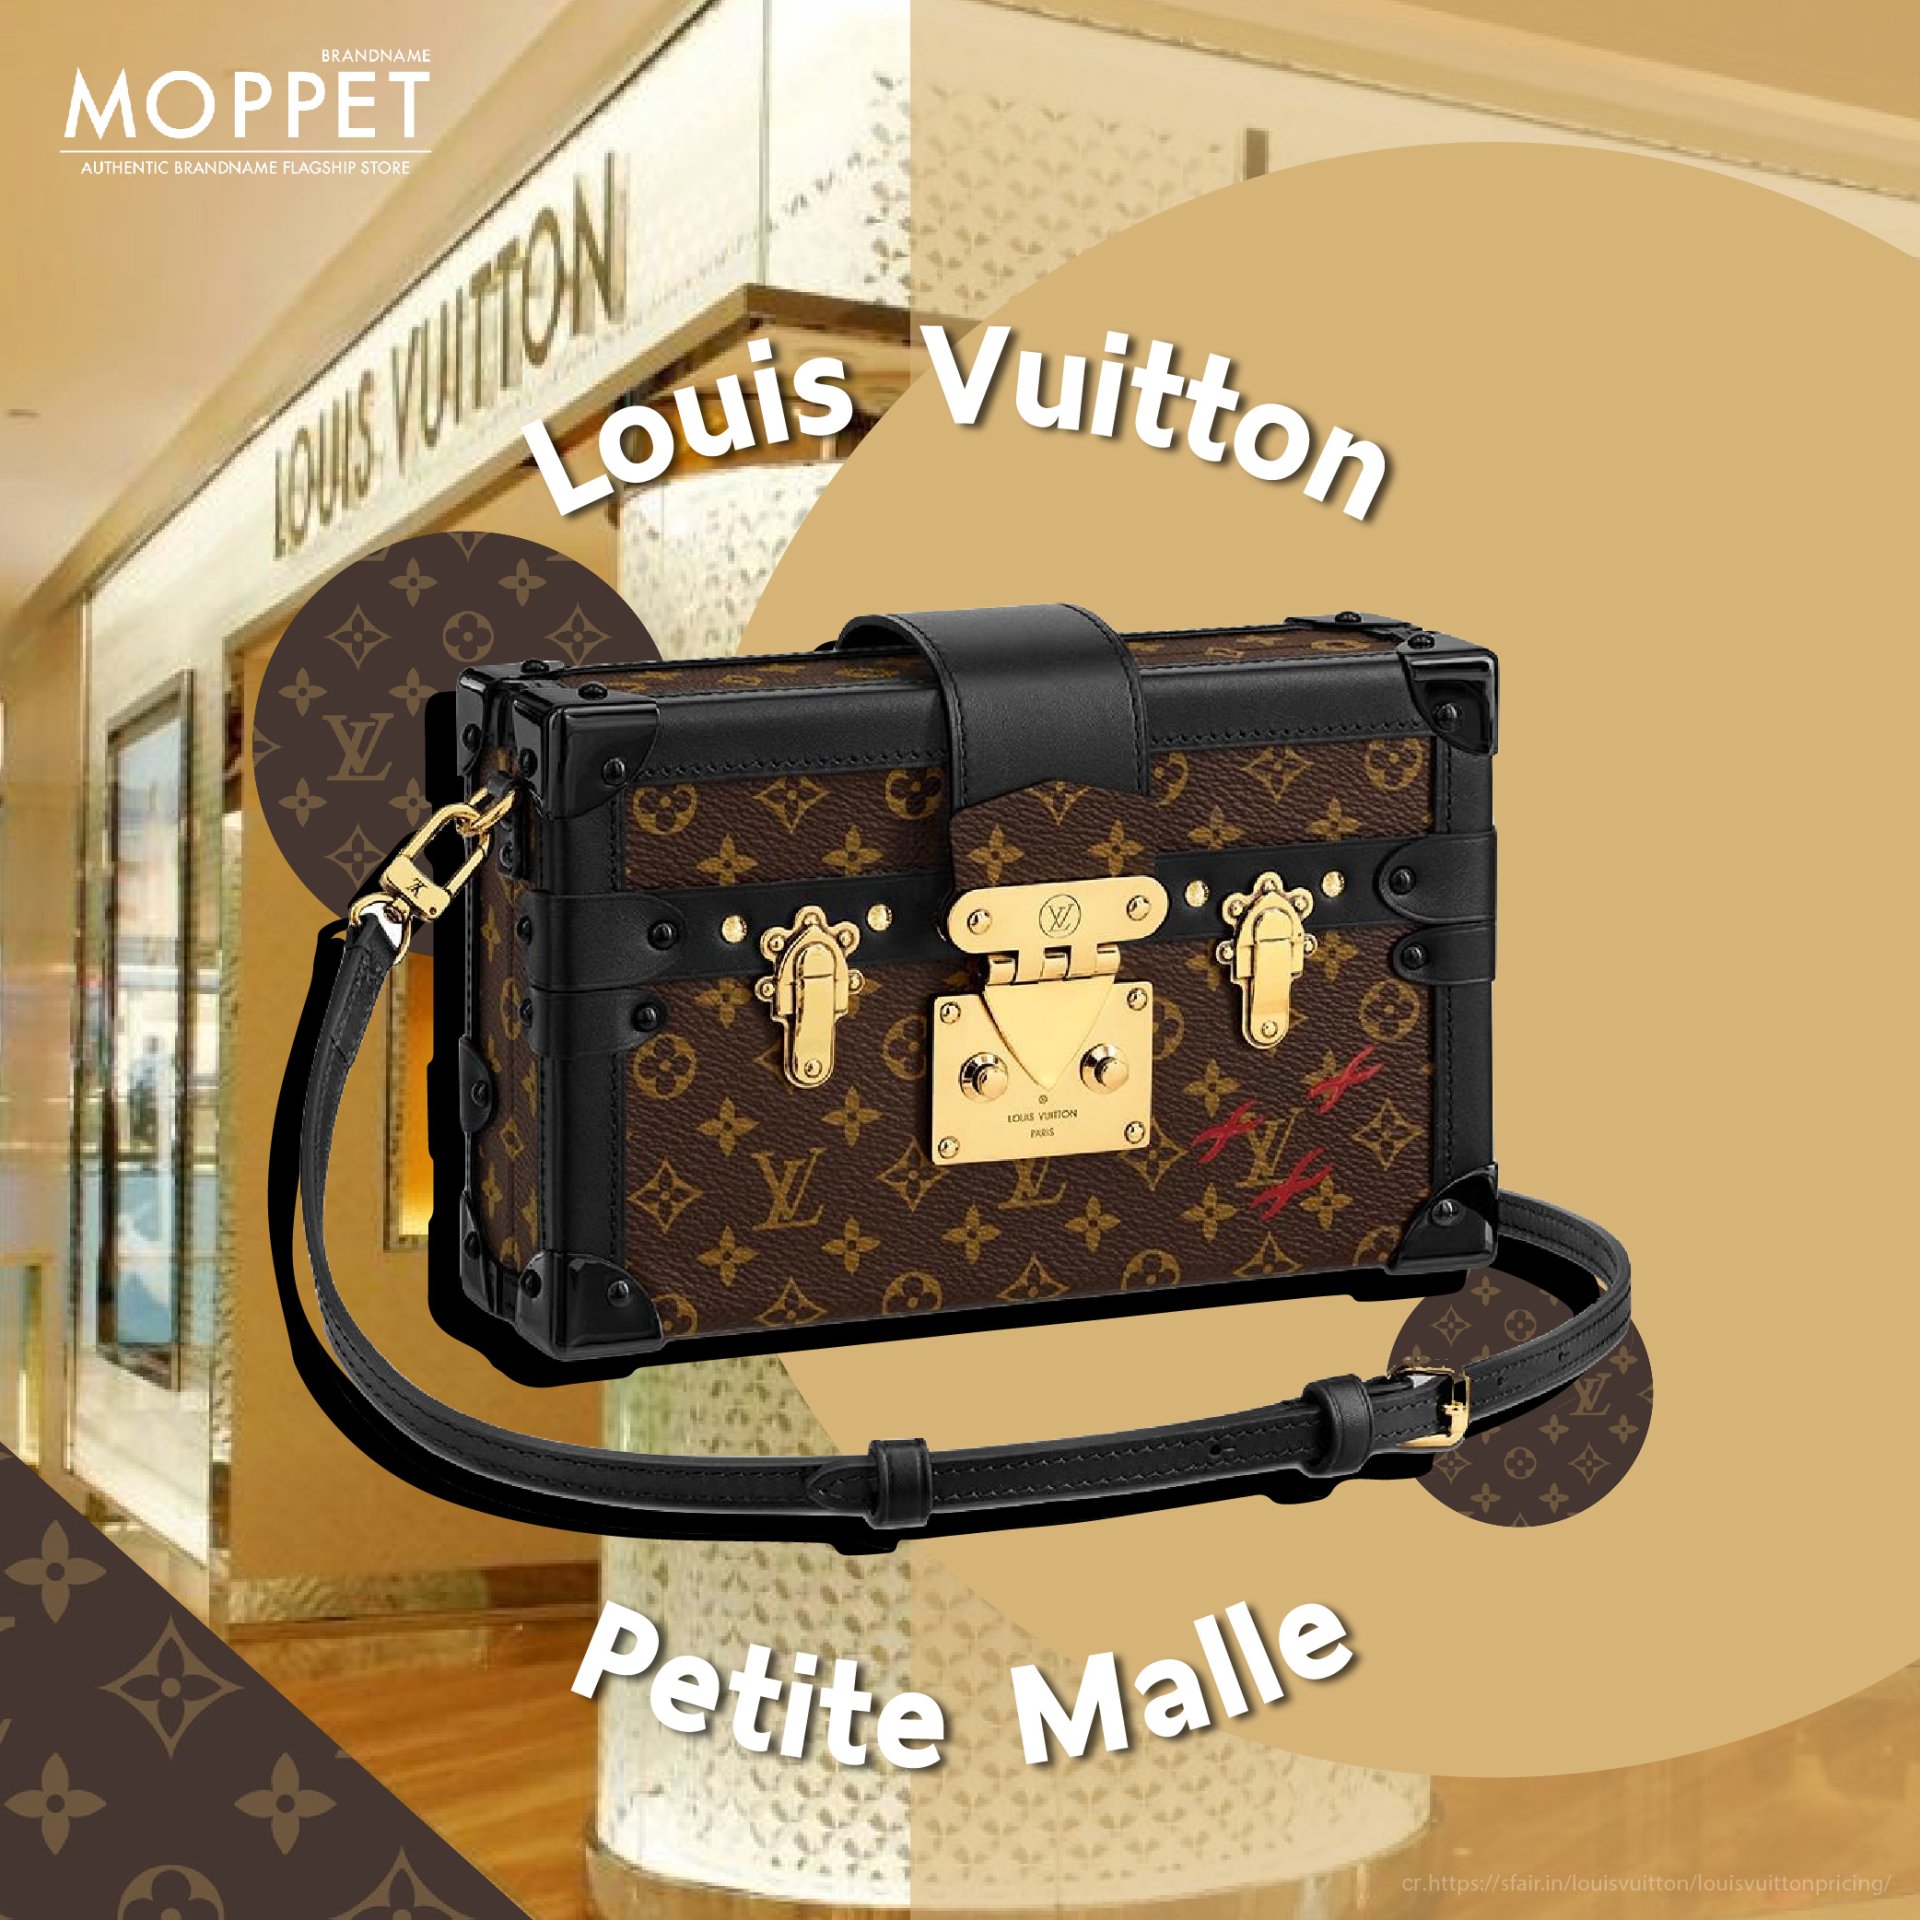 Louis Vuitton - moppetbrandname